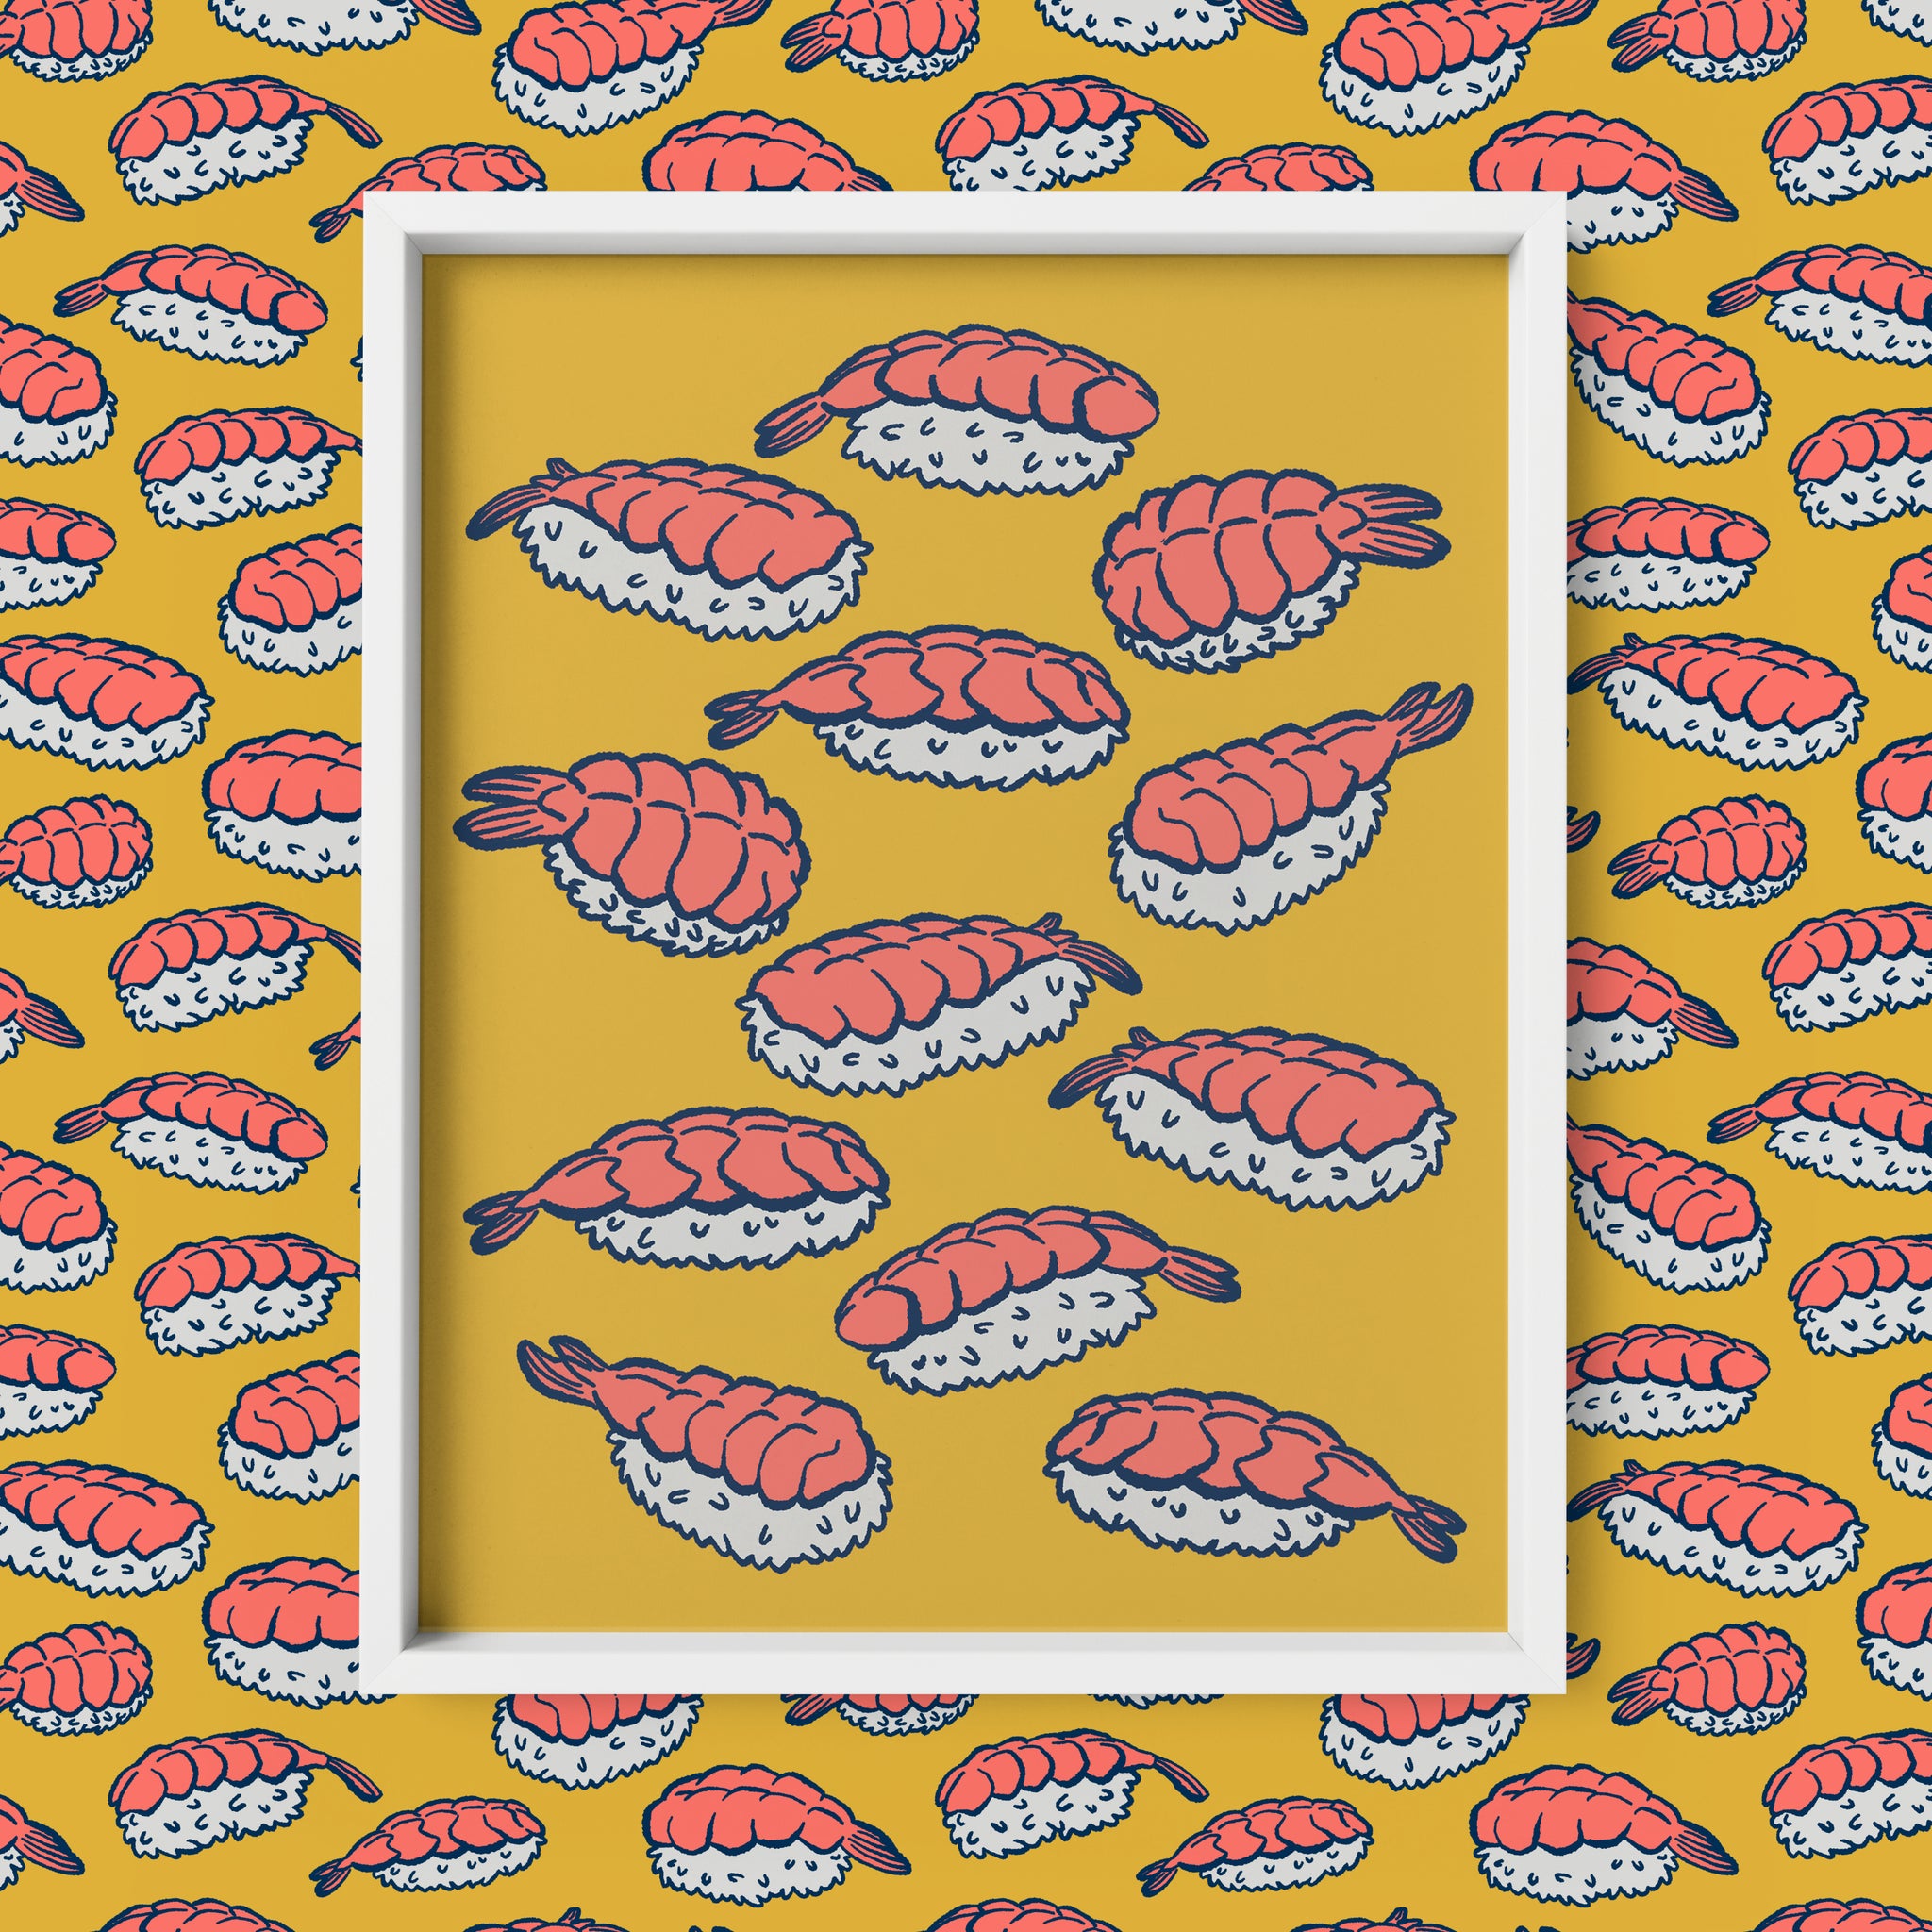 Shrimp Nigiri 8x10 Art Print